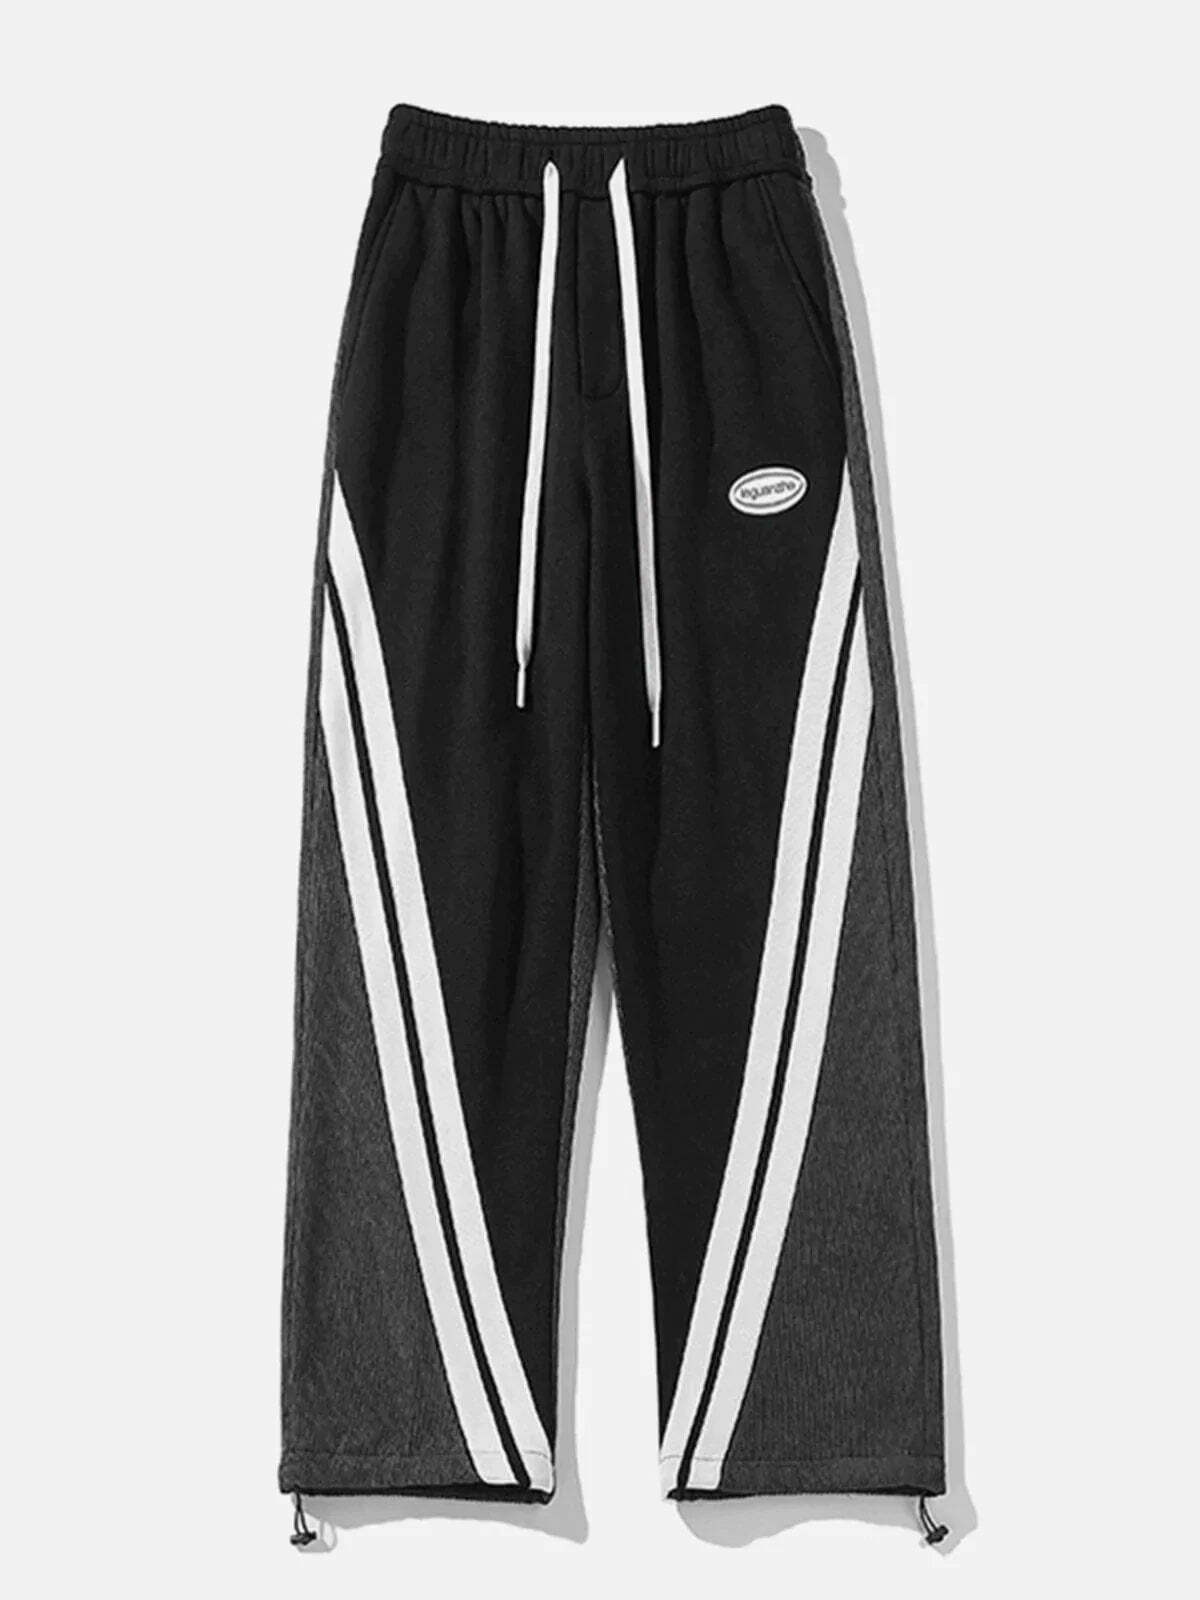 contrast corduroy sweatpants edgy & retro streetwear 3667